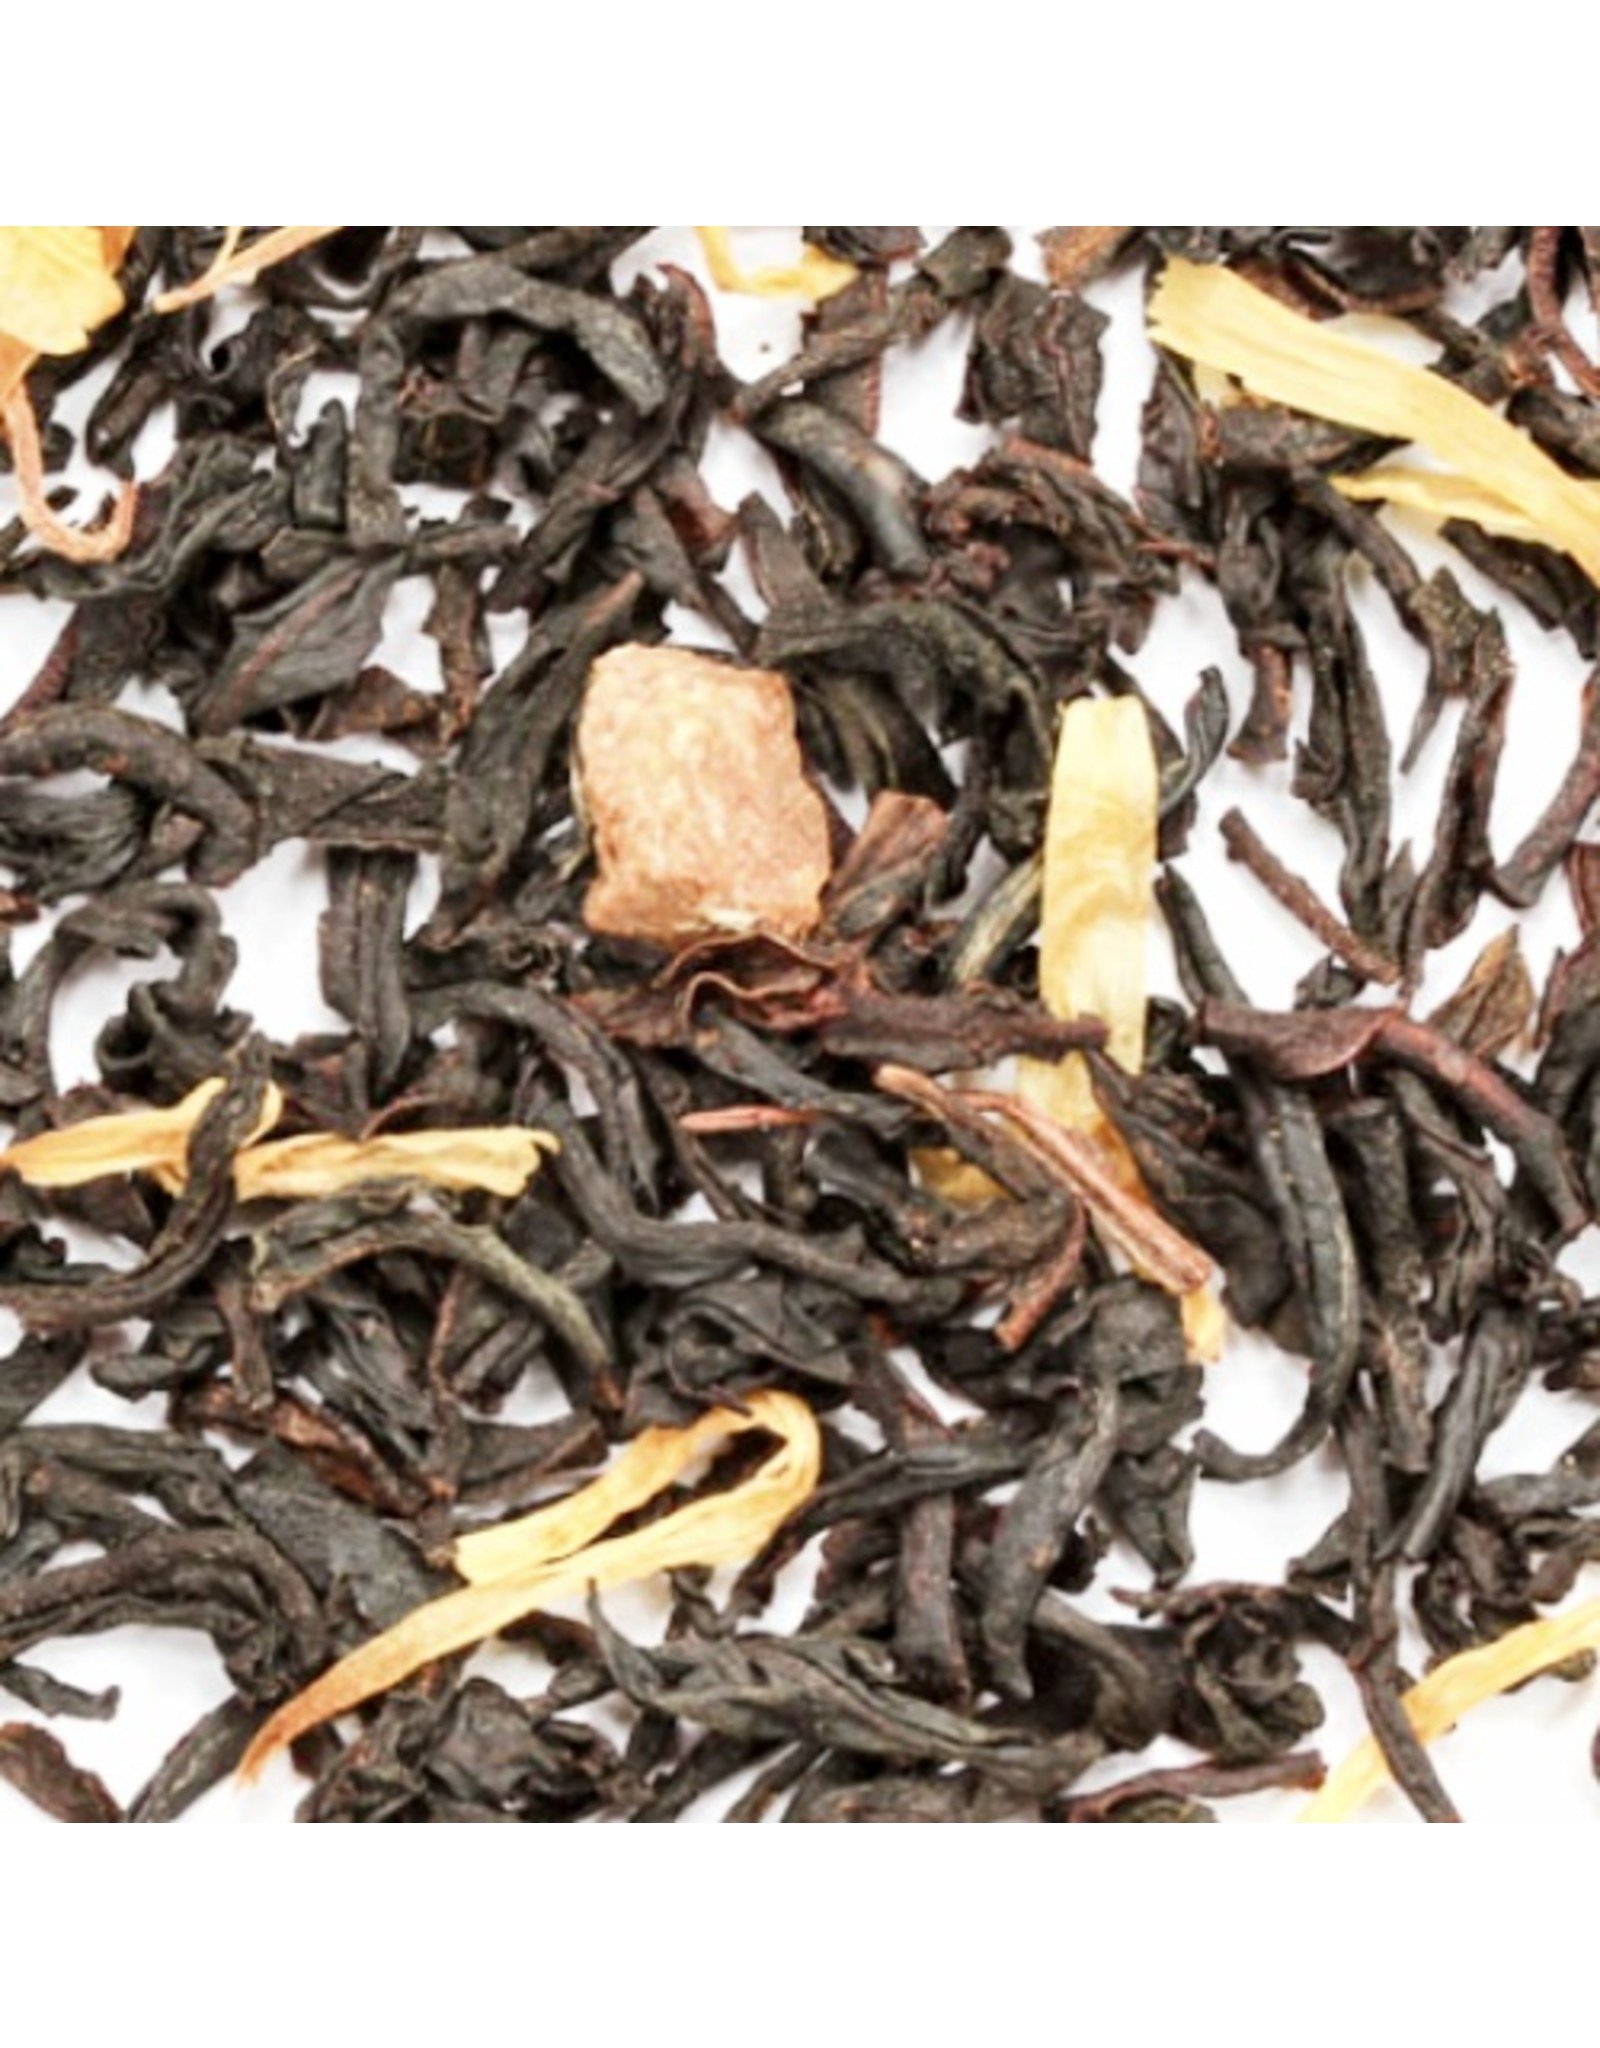 Tea from Sri Lanka Brins Mesa Decaf Peach